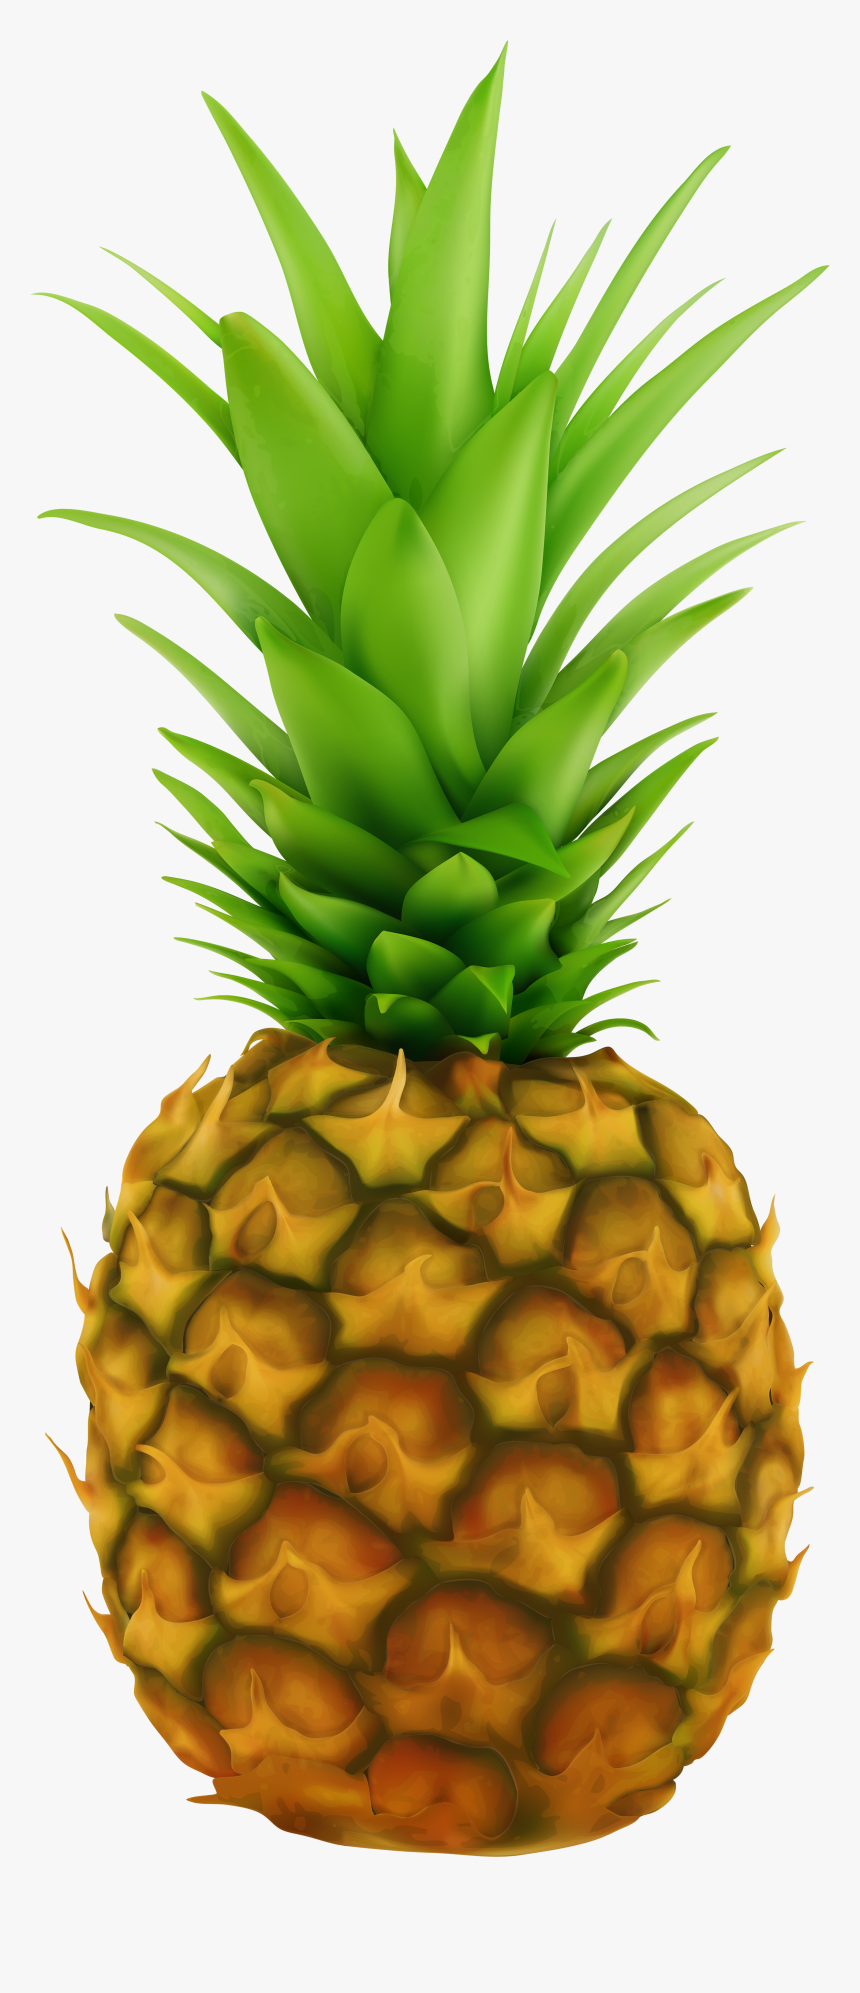 Pineapple Transparent Clip Art Image - Pineapple Fruit Transparent Background, HD Png Download, Free Download